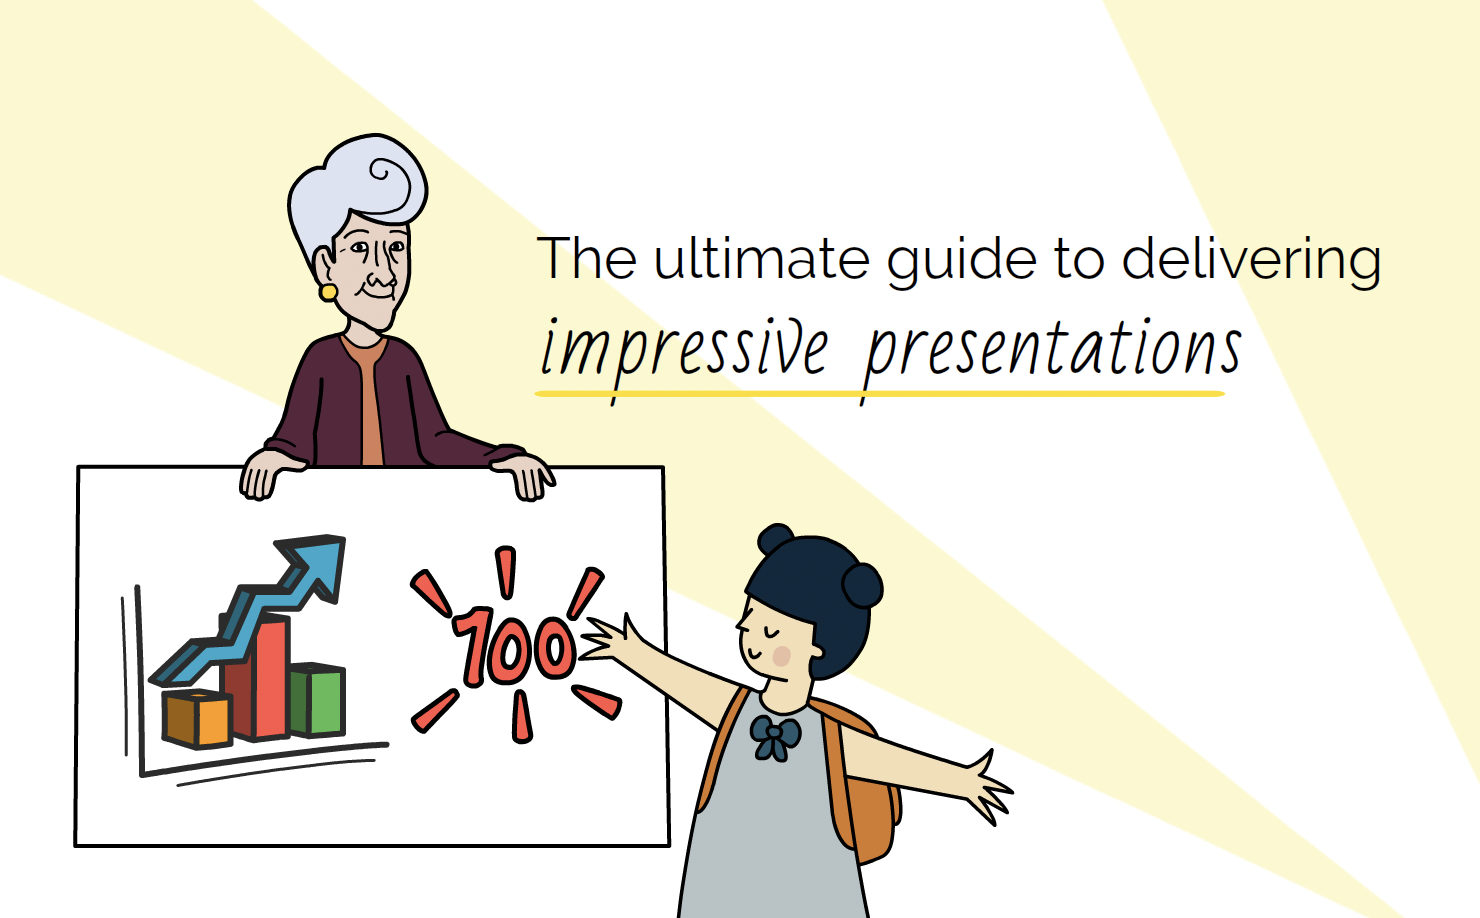 The ultimate guide to delivering impressive presentations